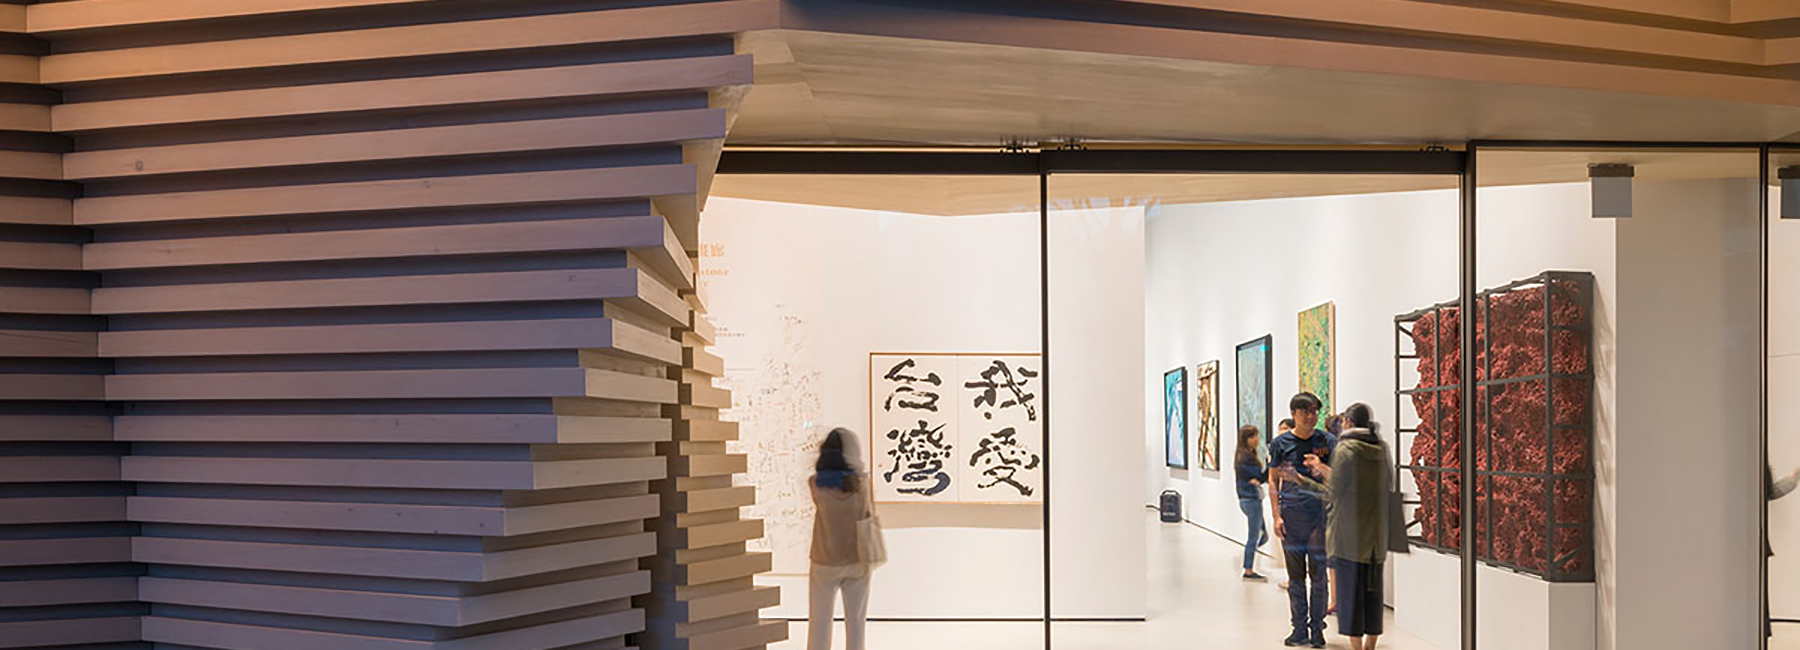 kengo kuma creates stacked wooden façade for whitestone gallery in taipei